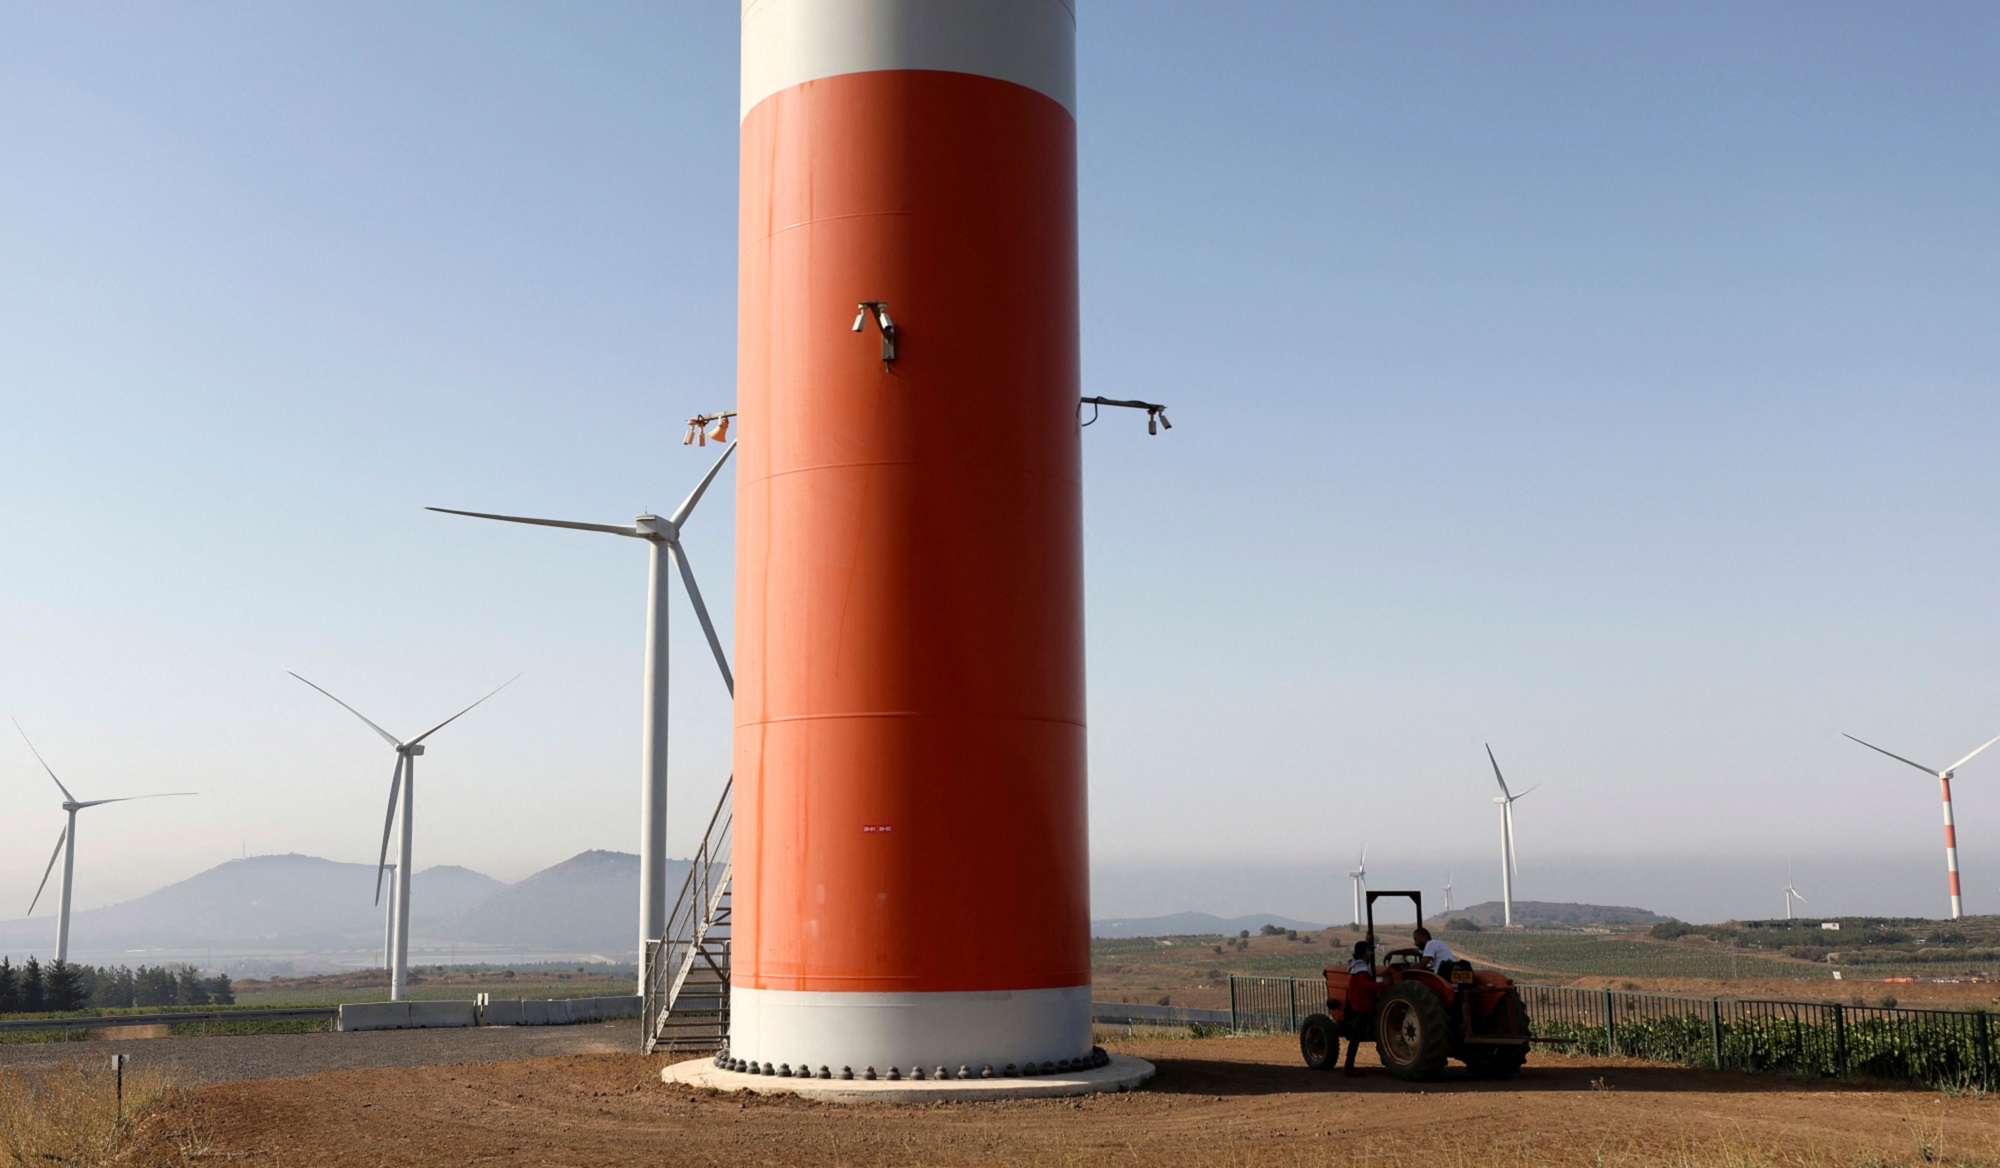 An Israeli wind project draws scrutiny on turbines and people’s health